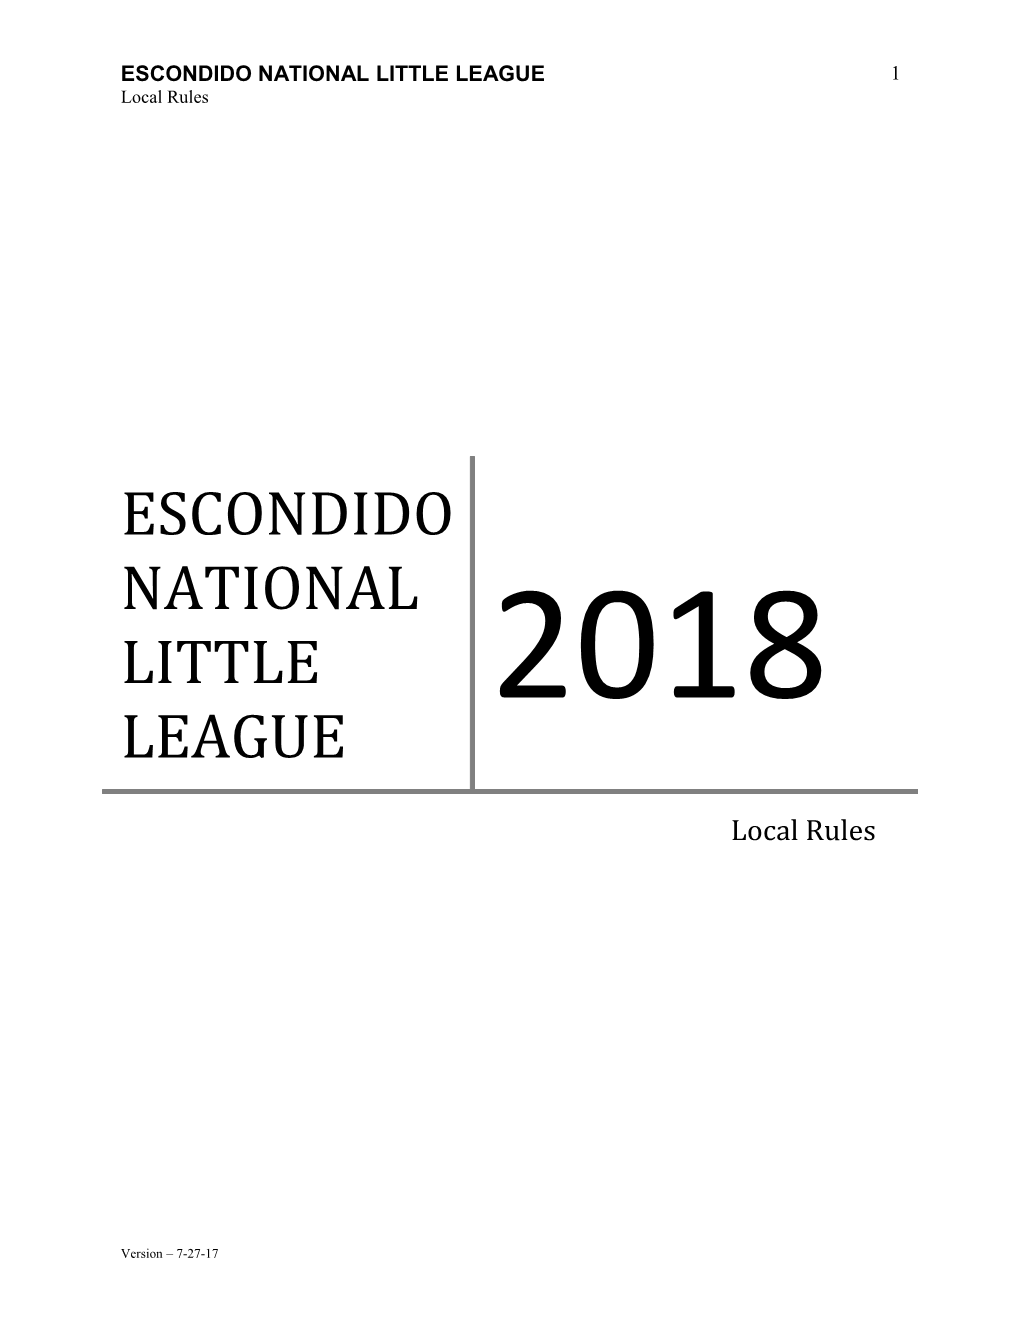 Escondido National Little League